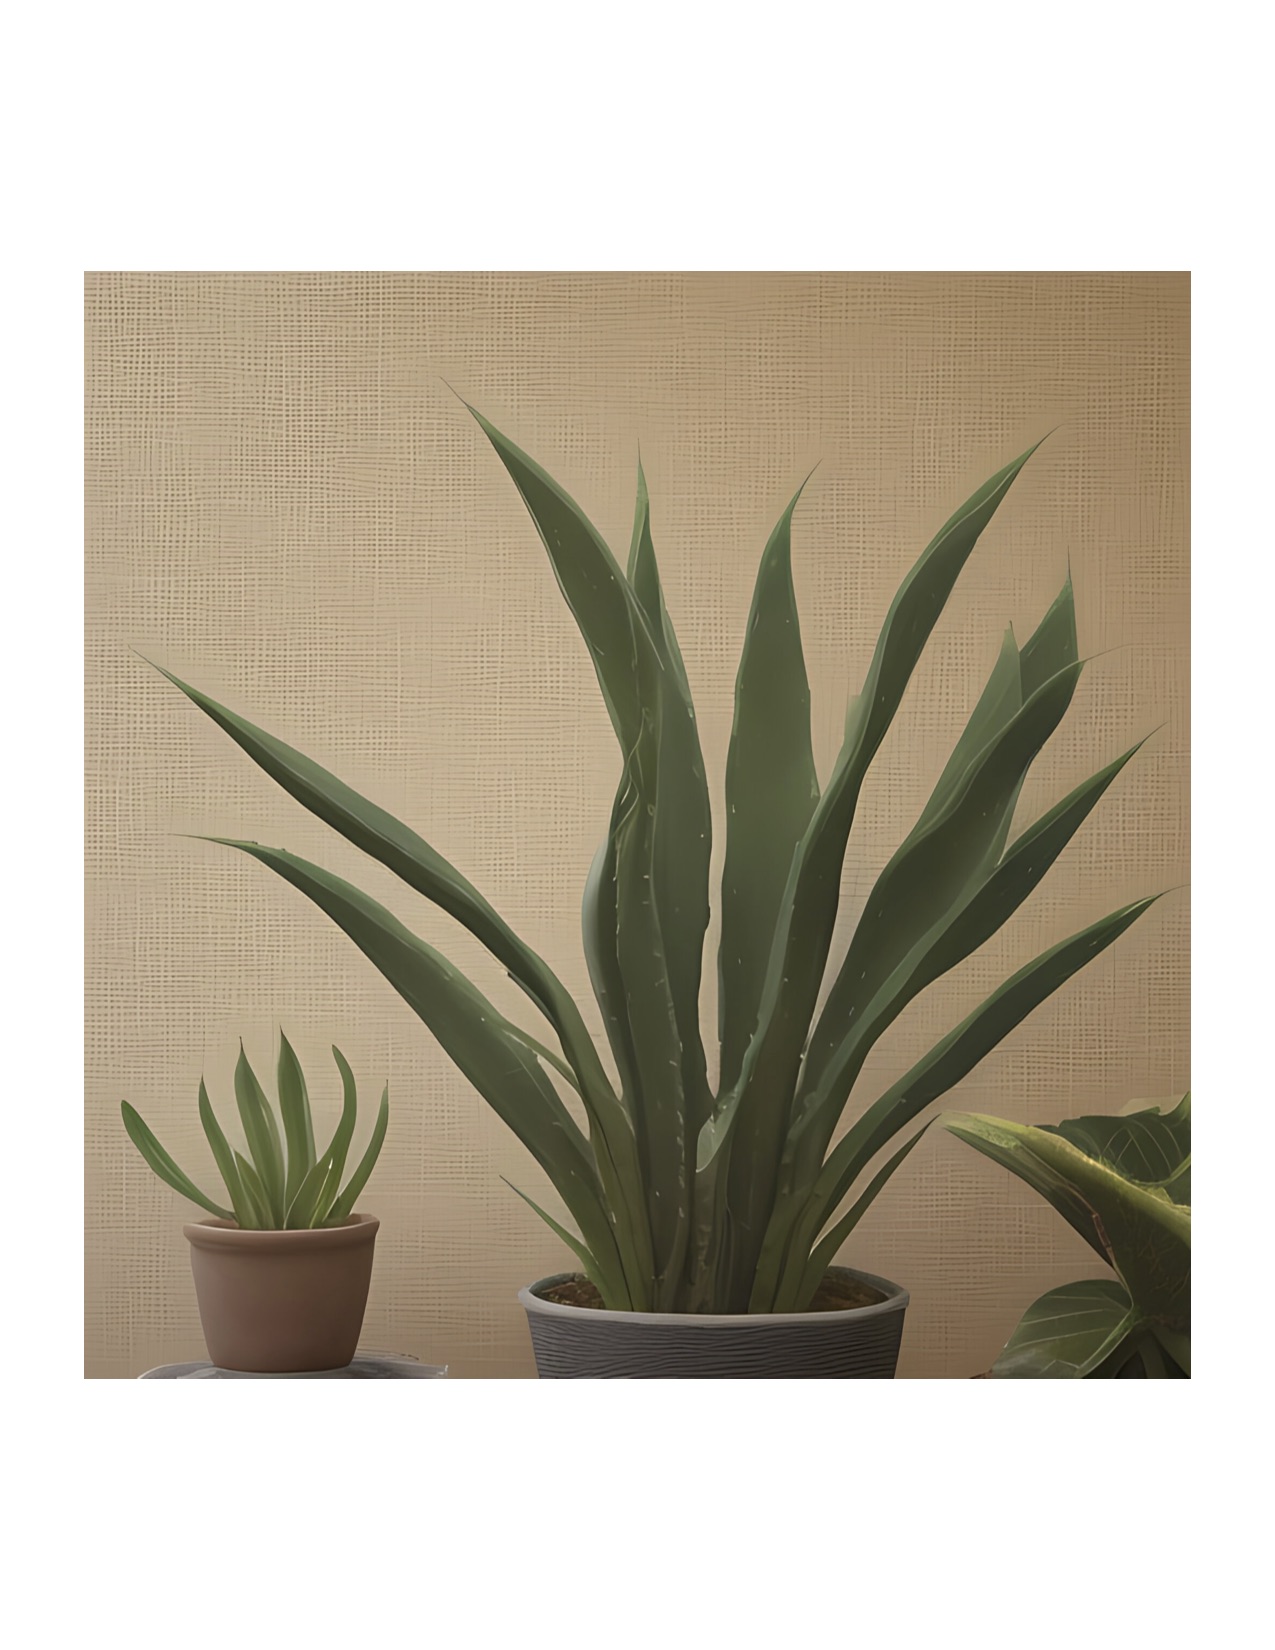 agave sisalana cactus plant